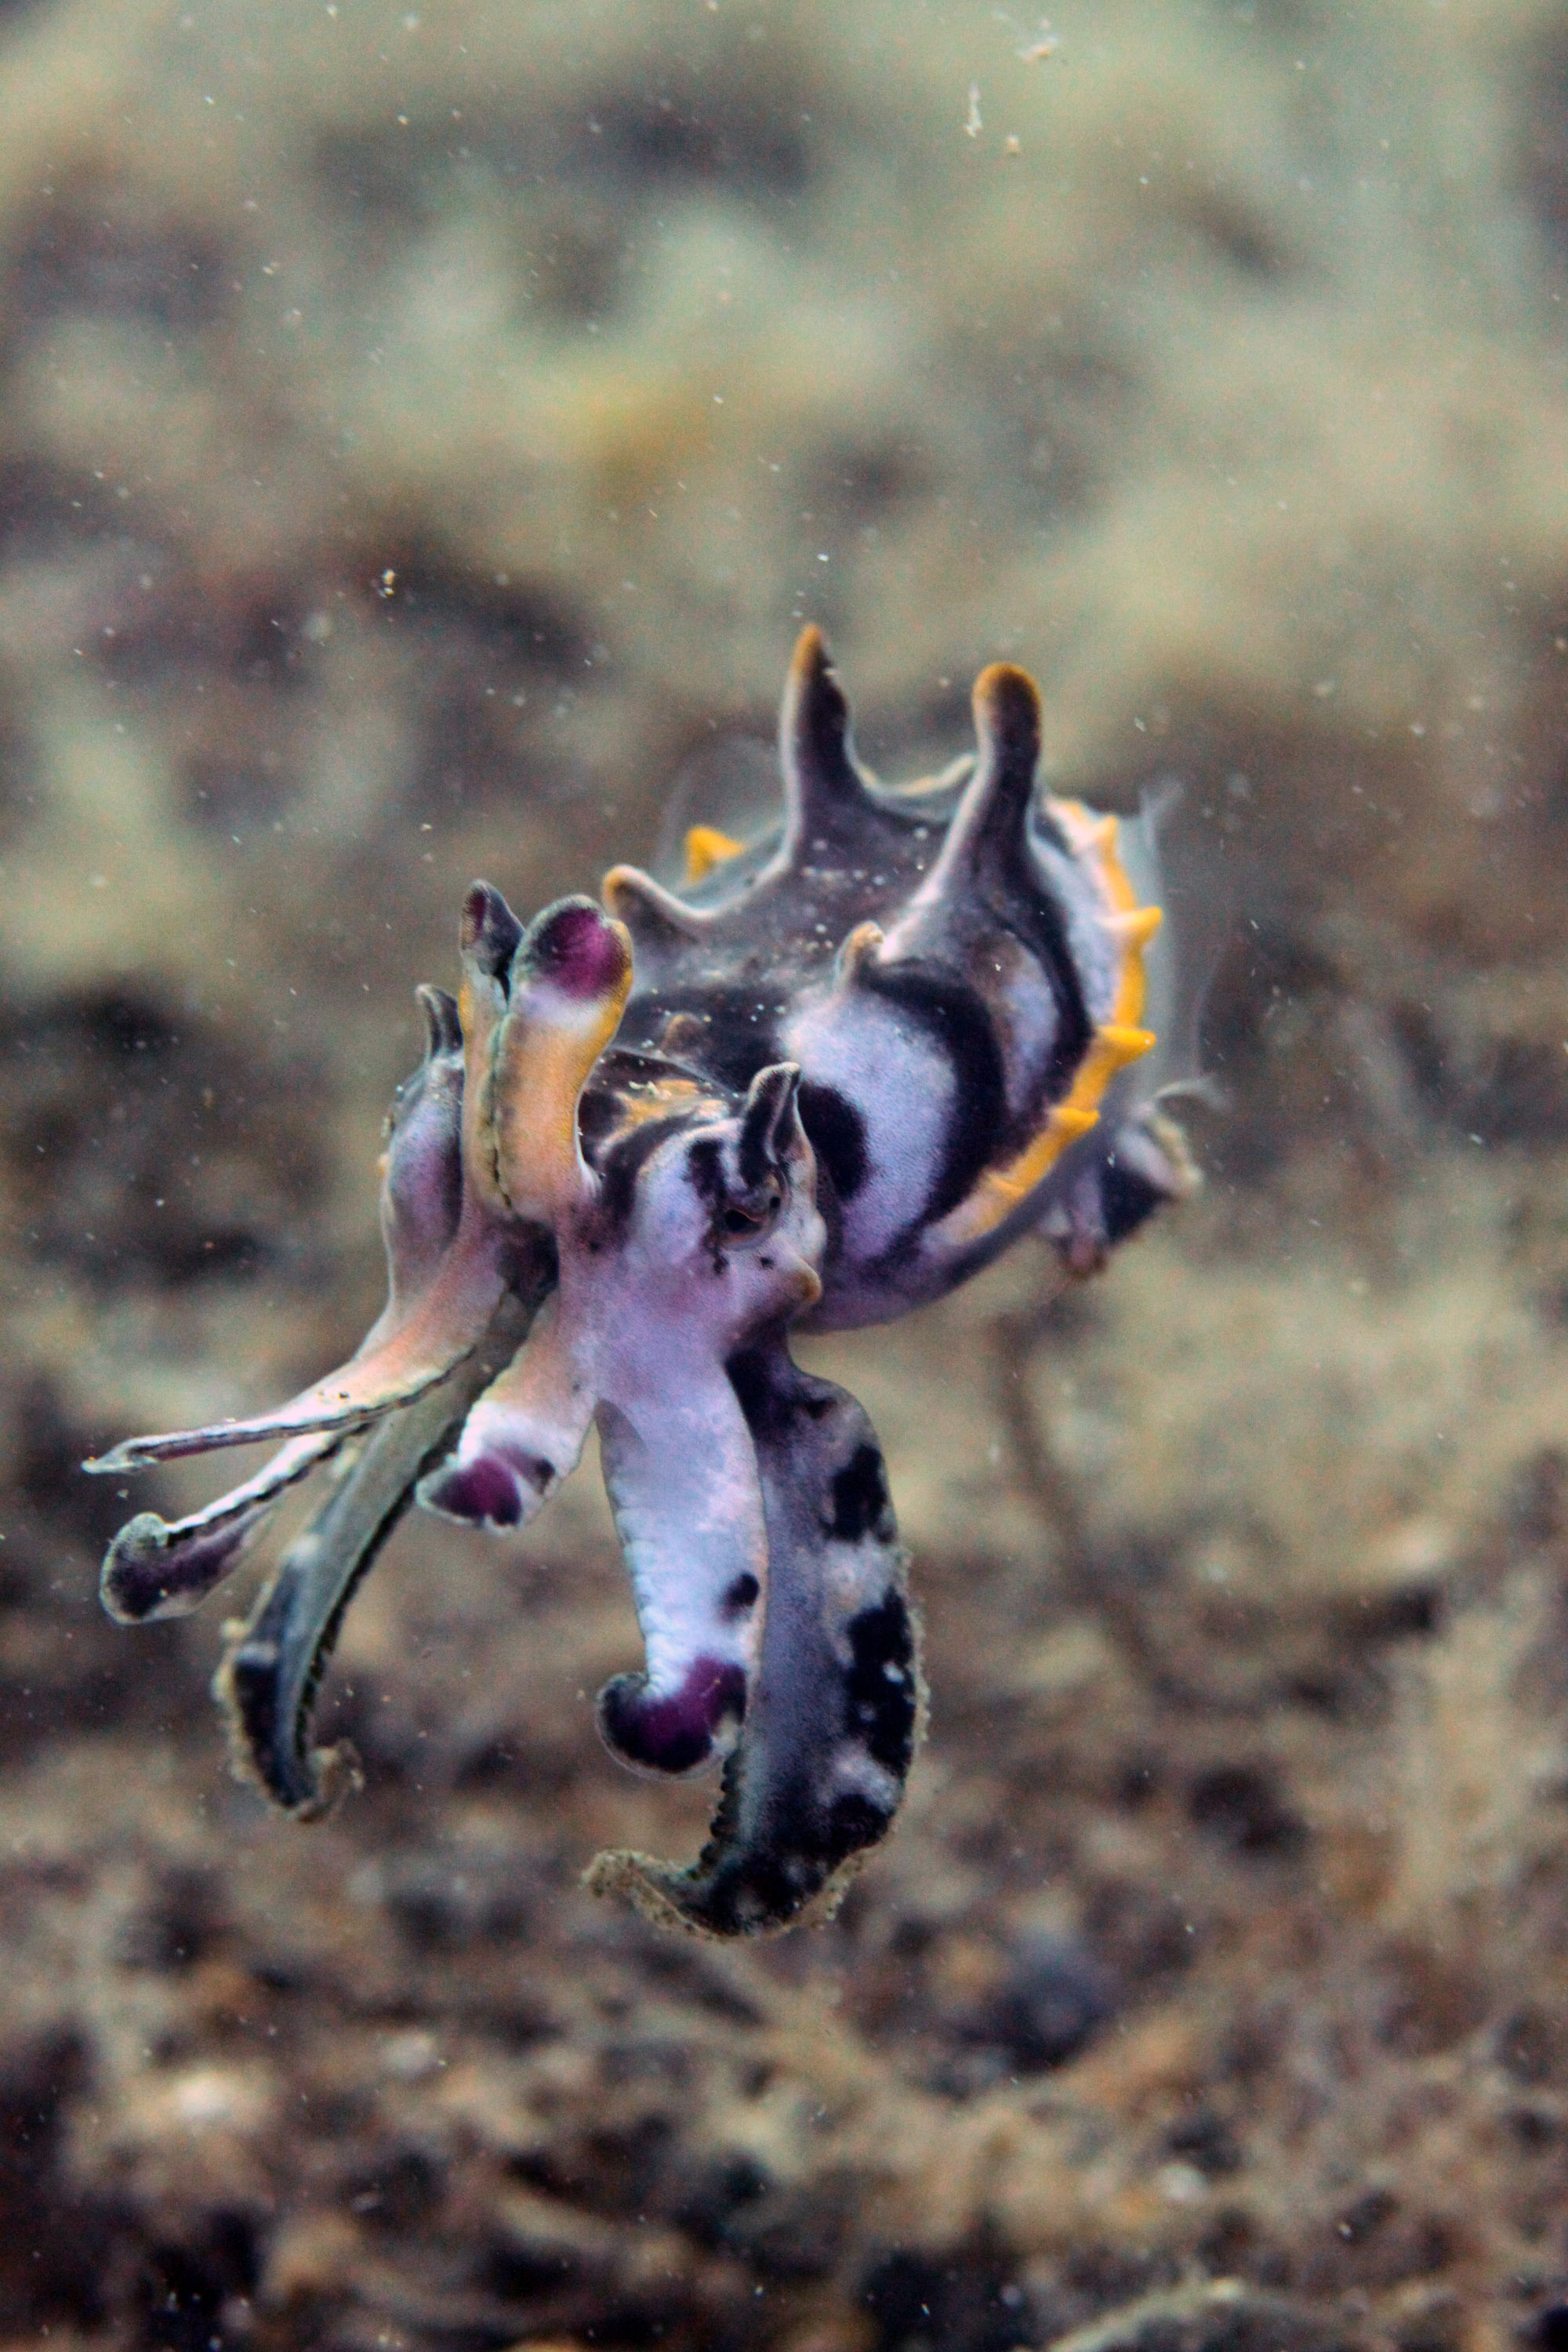 Juvenile Flamboyant Cuttlefish